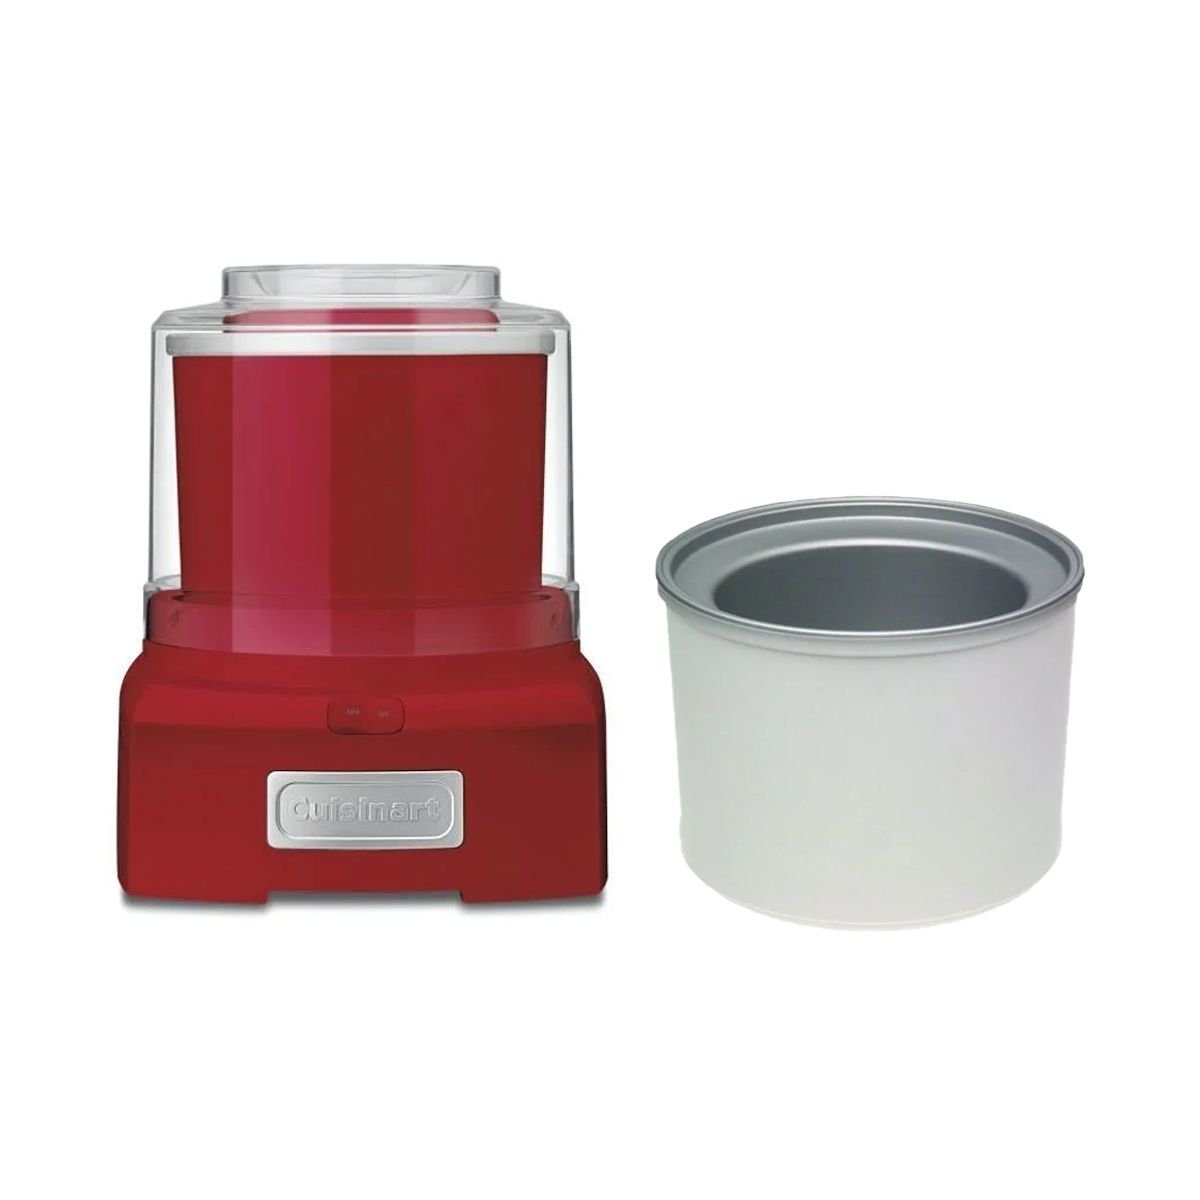 Cuisinart Automatic Frozen Yogurt-Ice Cream & Sorbet Maker, Red - 1.5 Qt. -  Bed Bath & Beyond - 33238807